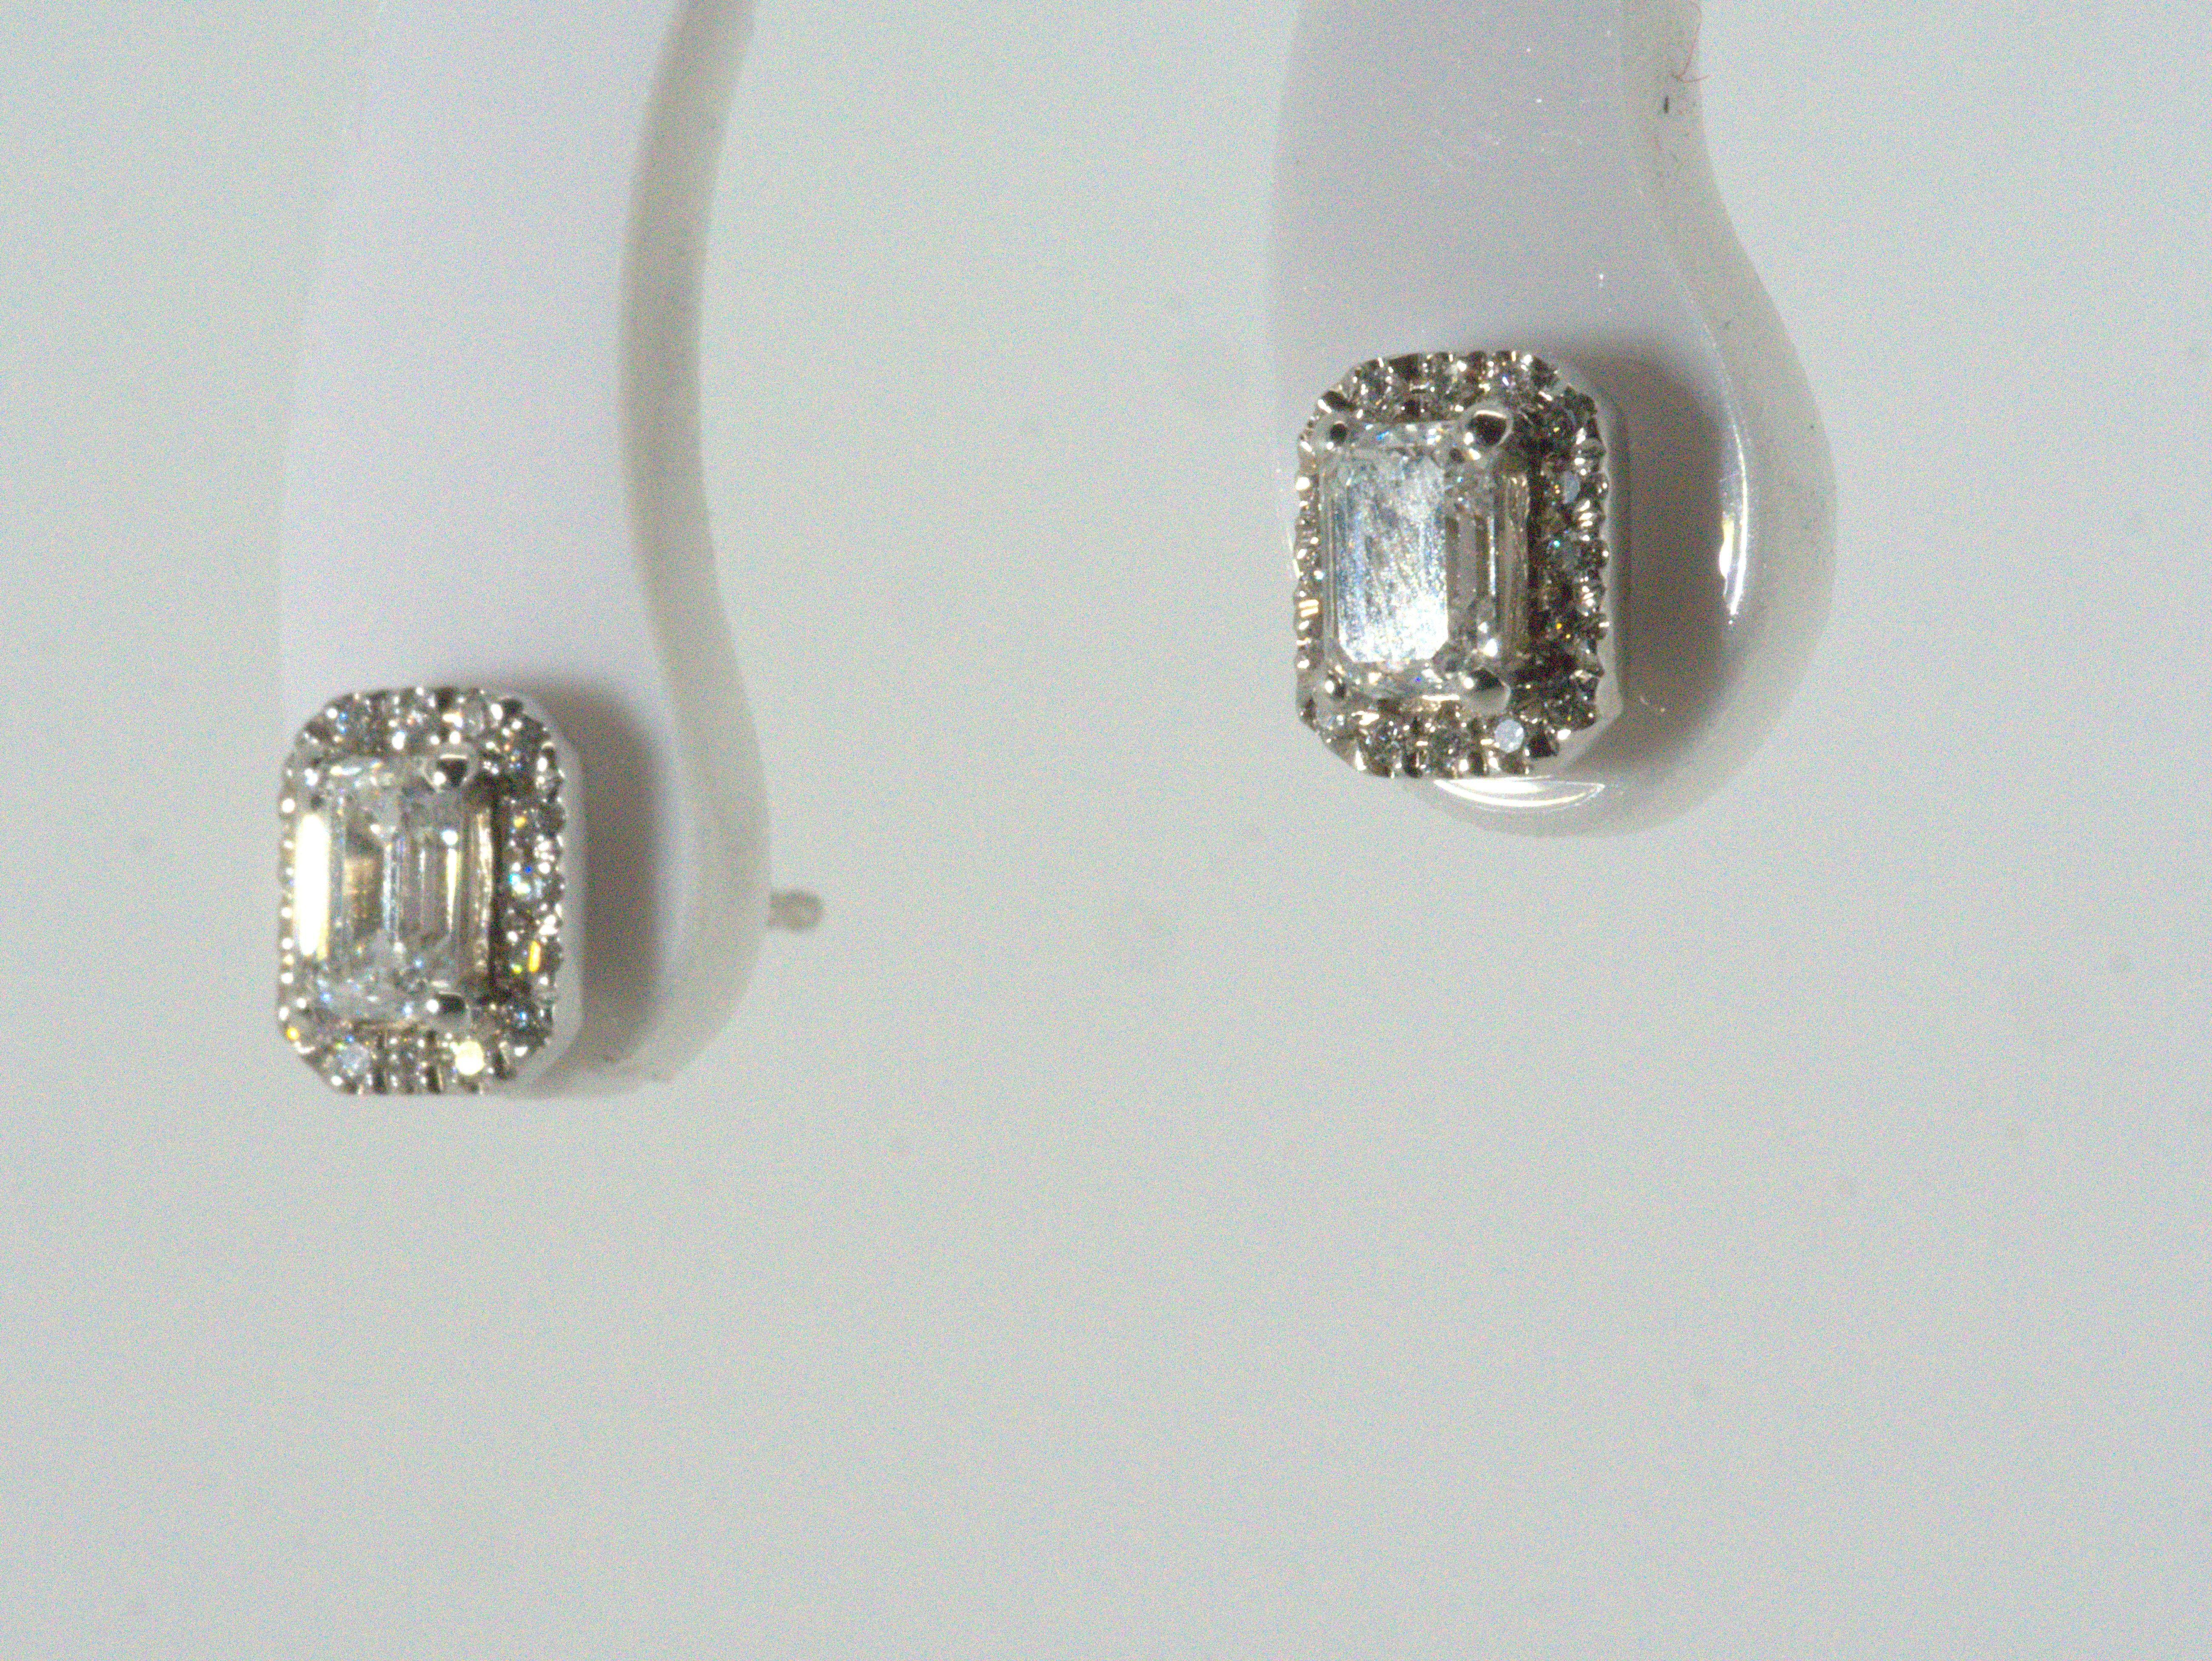 Emerald Cut Beautiful 18k White Gold Earrings with 0.93 Ct Natural Diamonds, GIA Cert